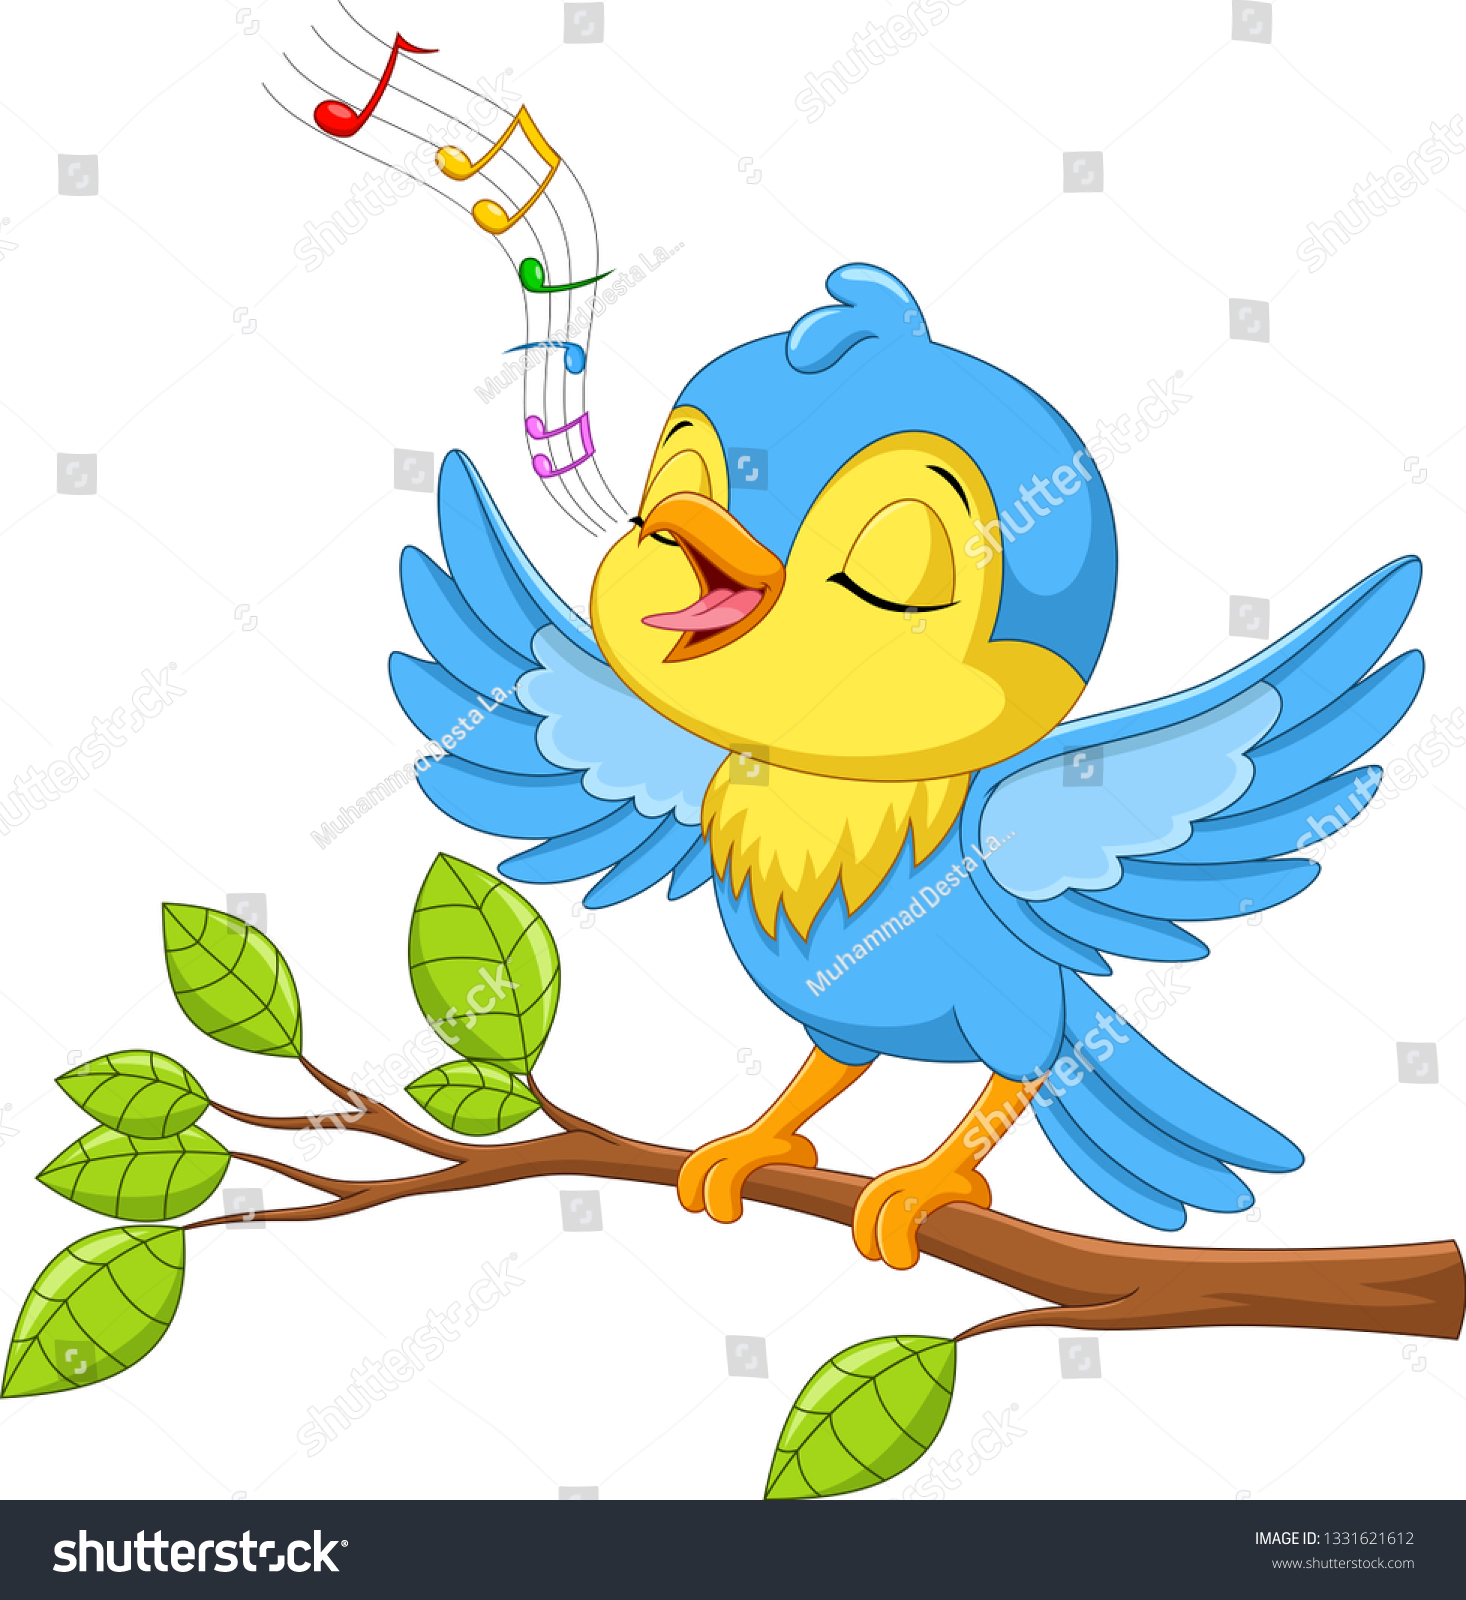 cute-little-bird-sings-on-tree-vetor-stock-livre-de-direitos-1331621612